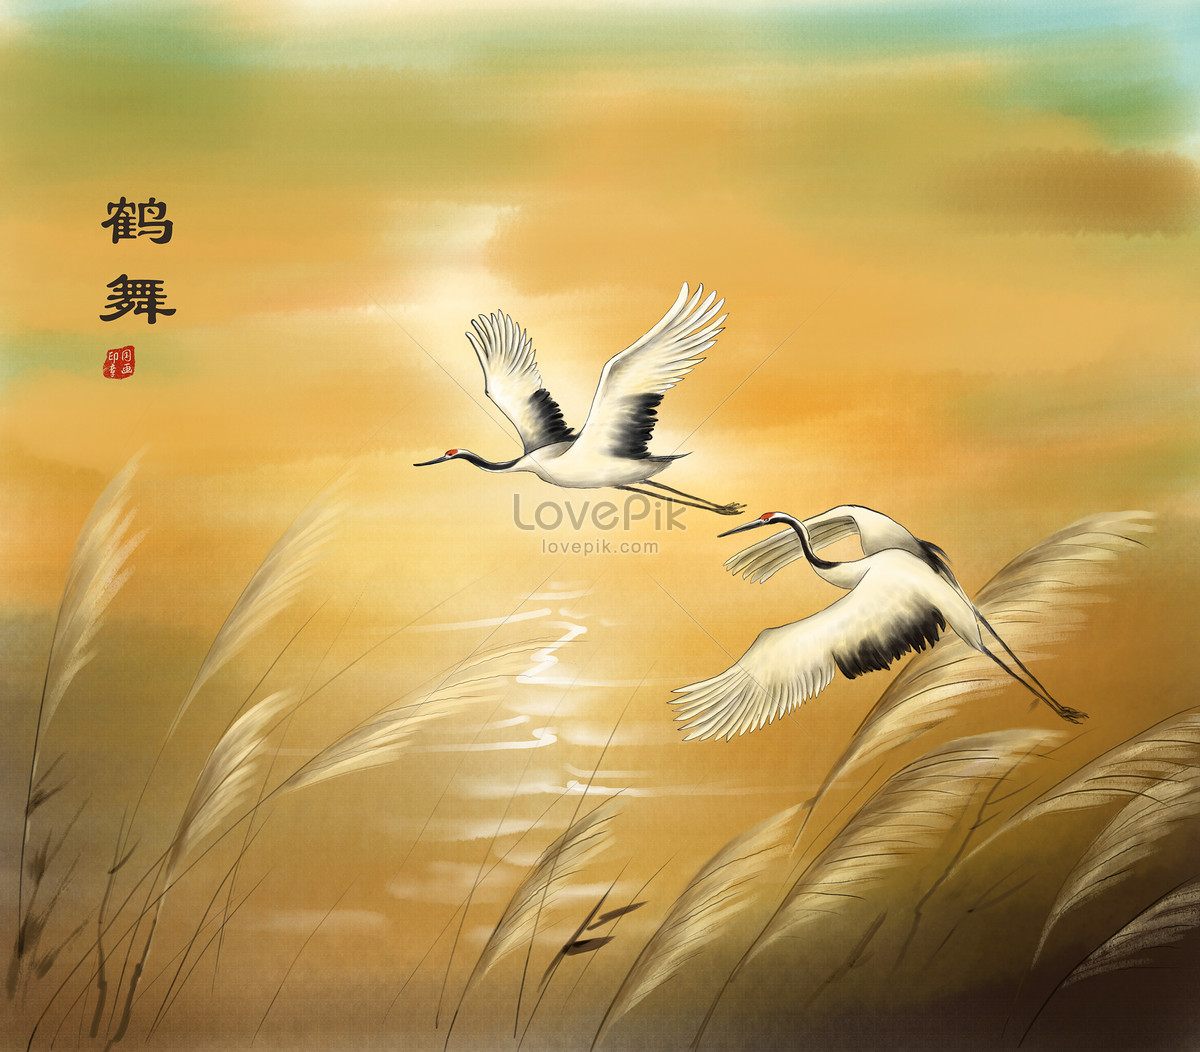 The crane dance qiu yang illustration image_picture free download ...